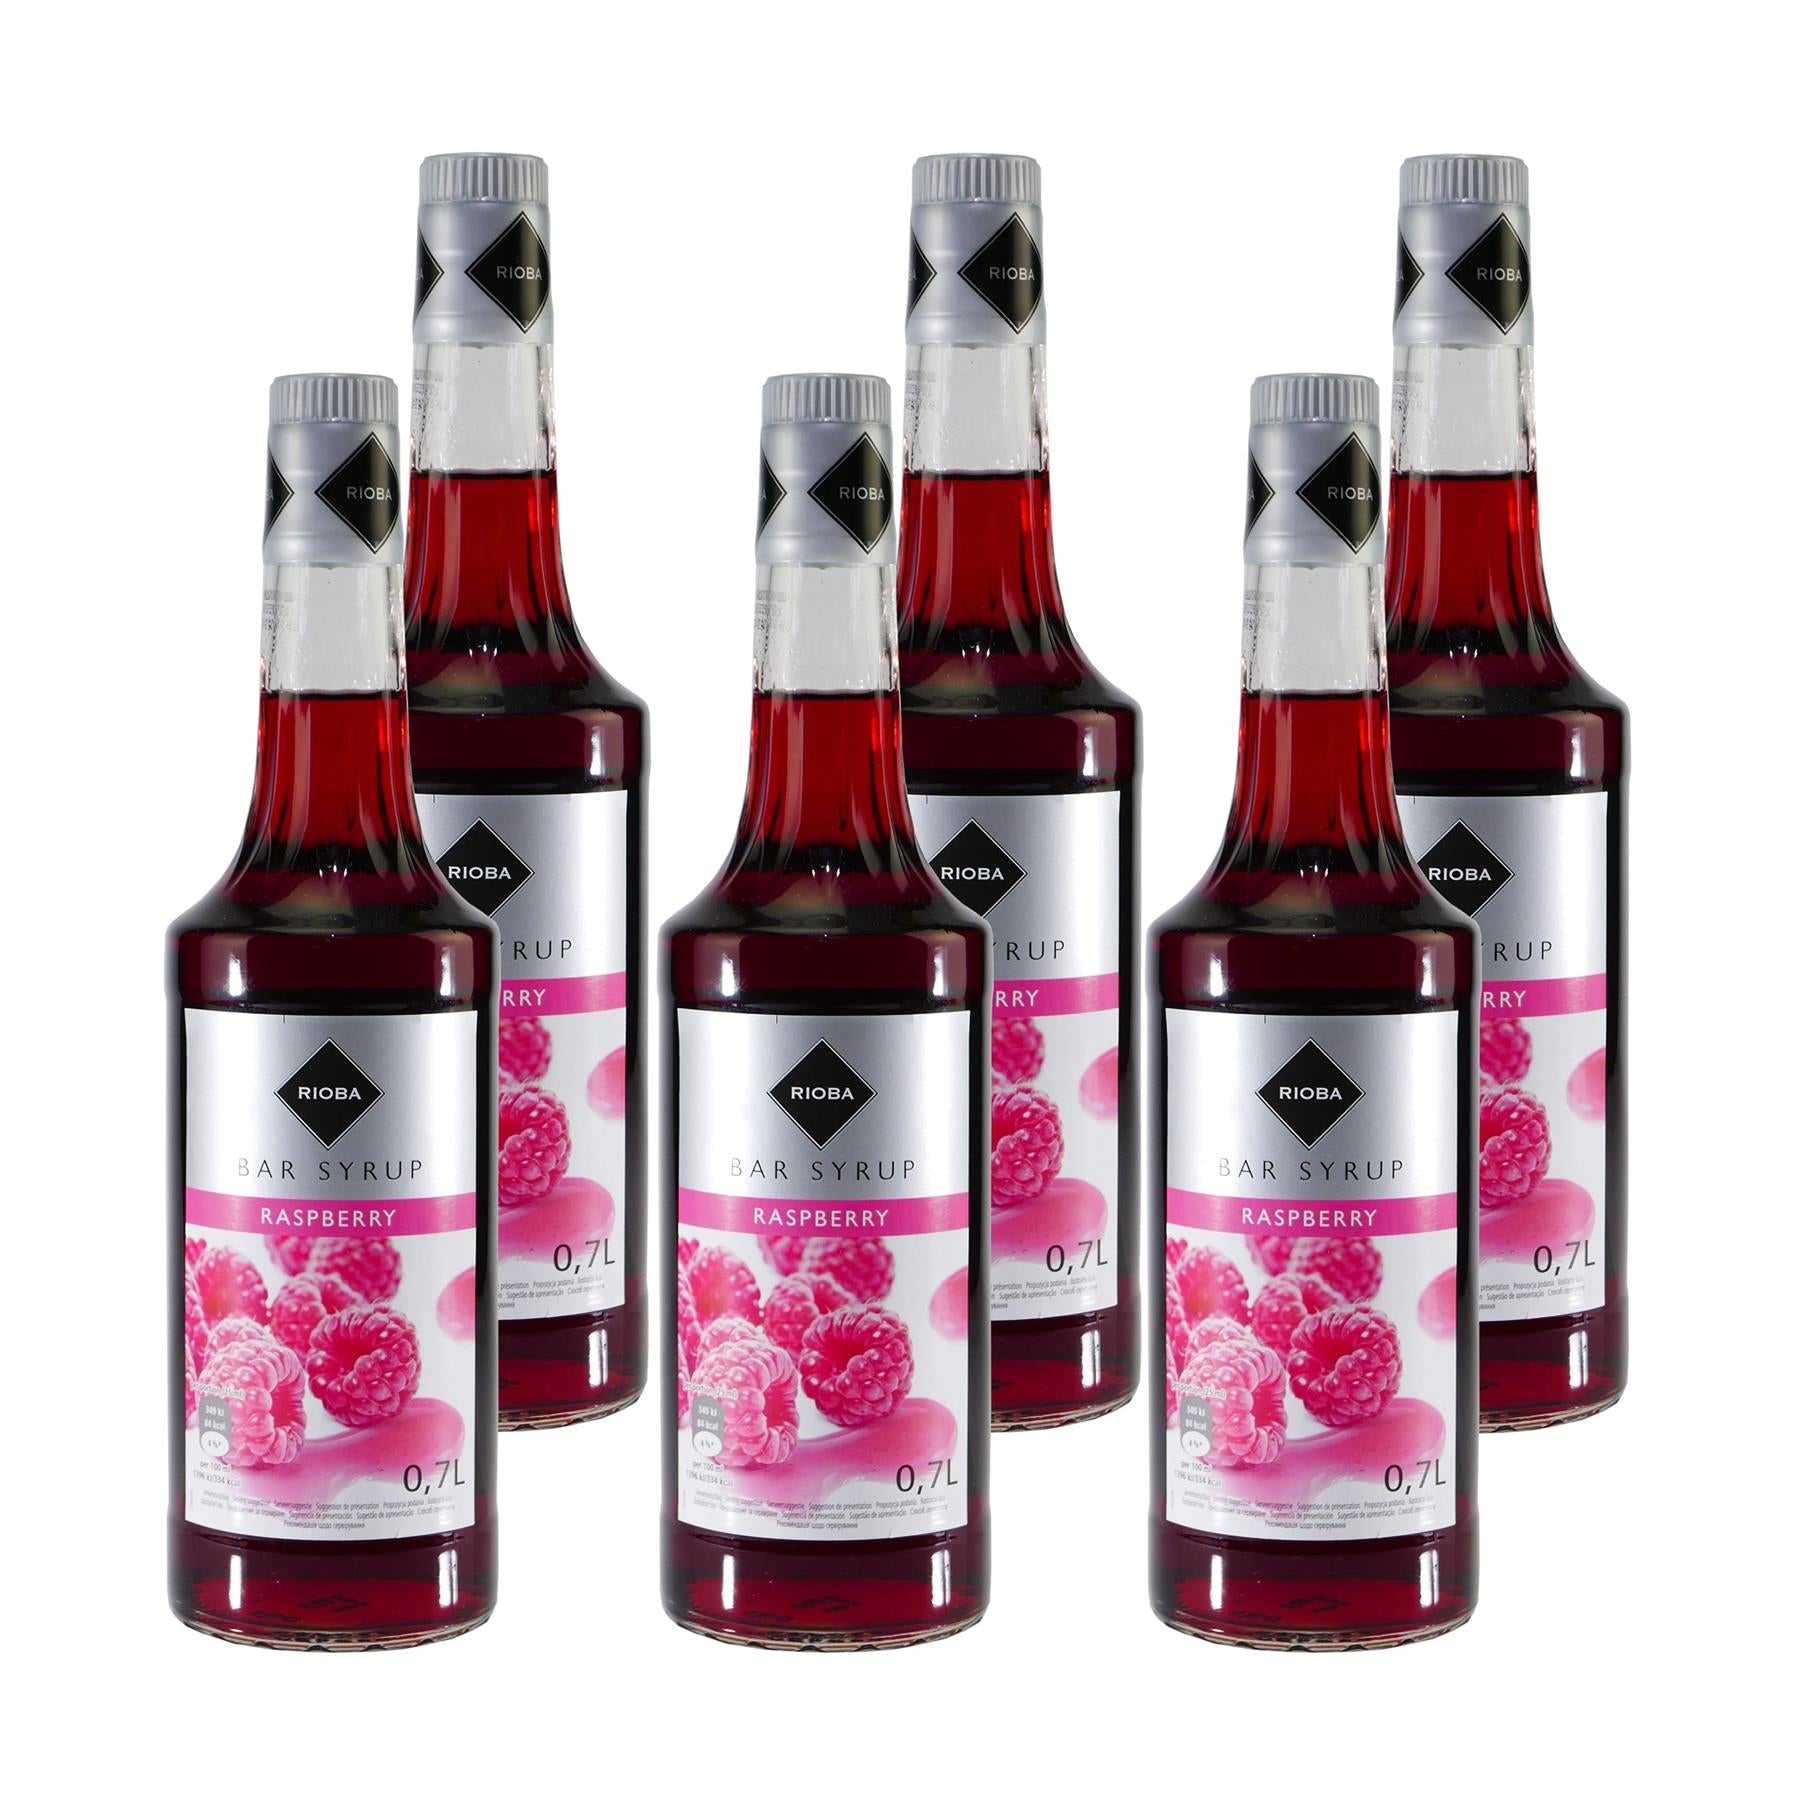 Rioba Rapsberry (Himbeer) Bar-Syrup (6 x 0,7L)